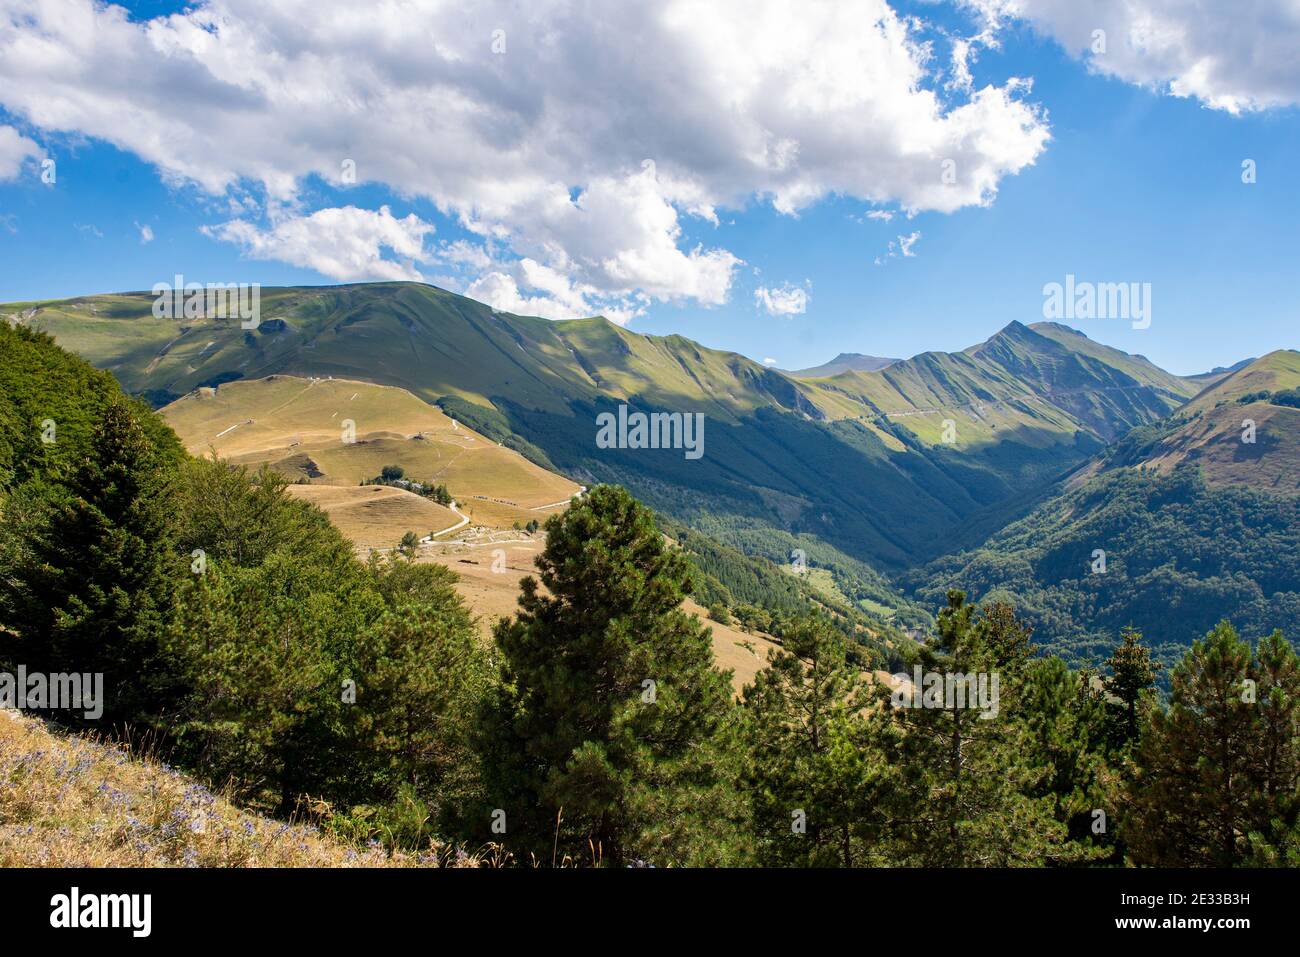 Sibillini mountains range in the Sibillini Mountains National Park, central Italy, summer season Stock Photo